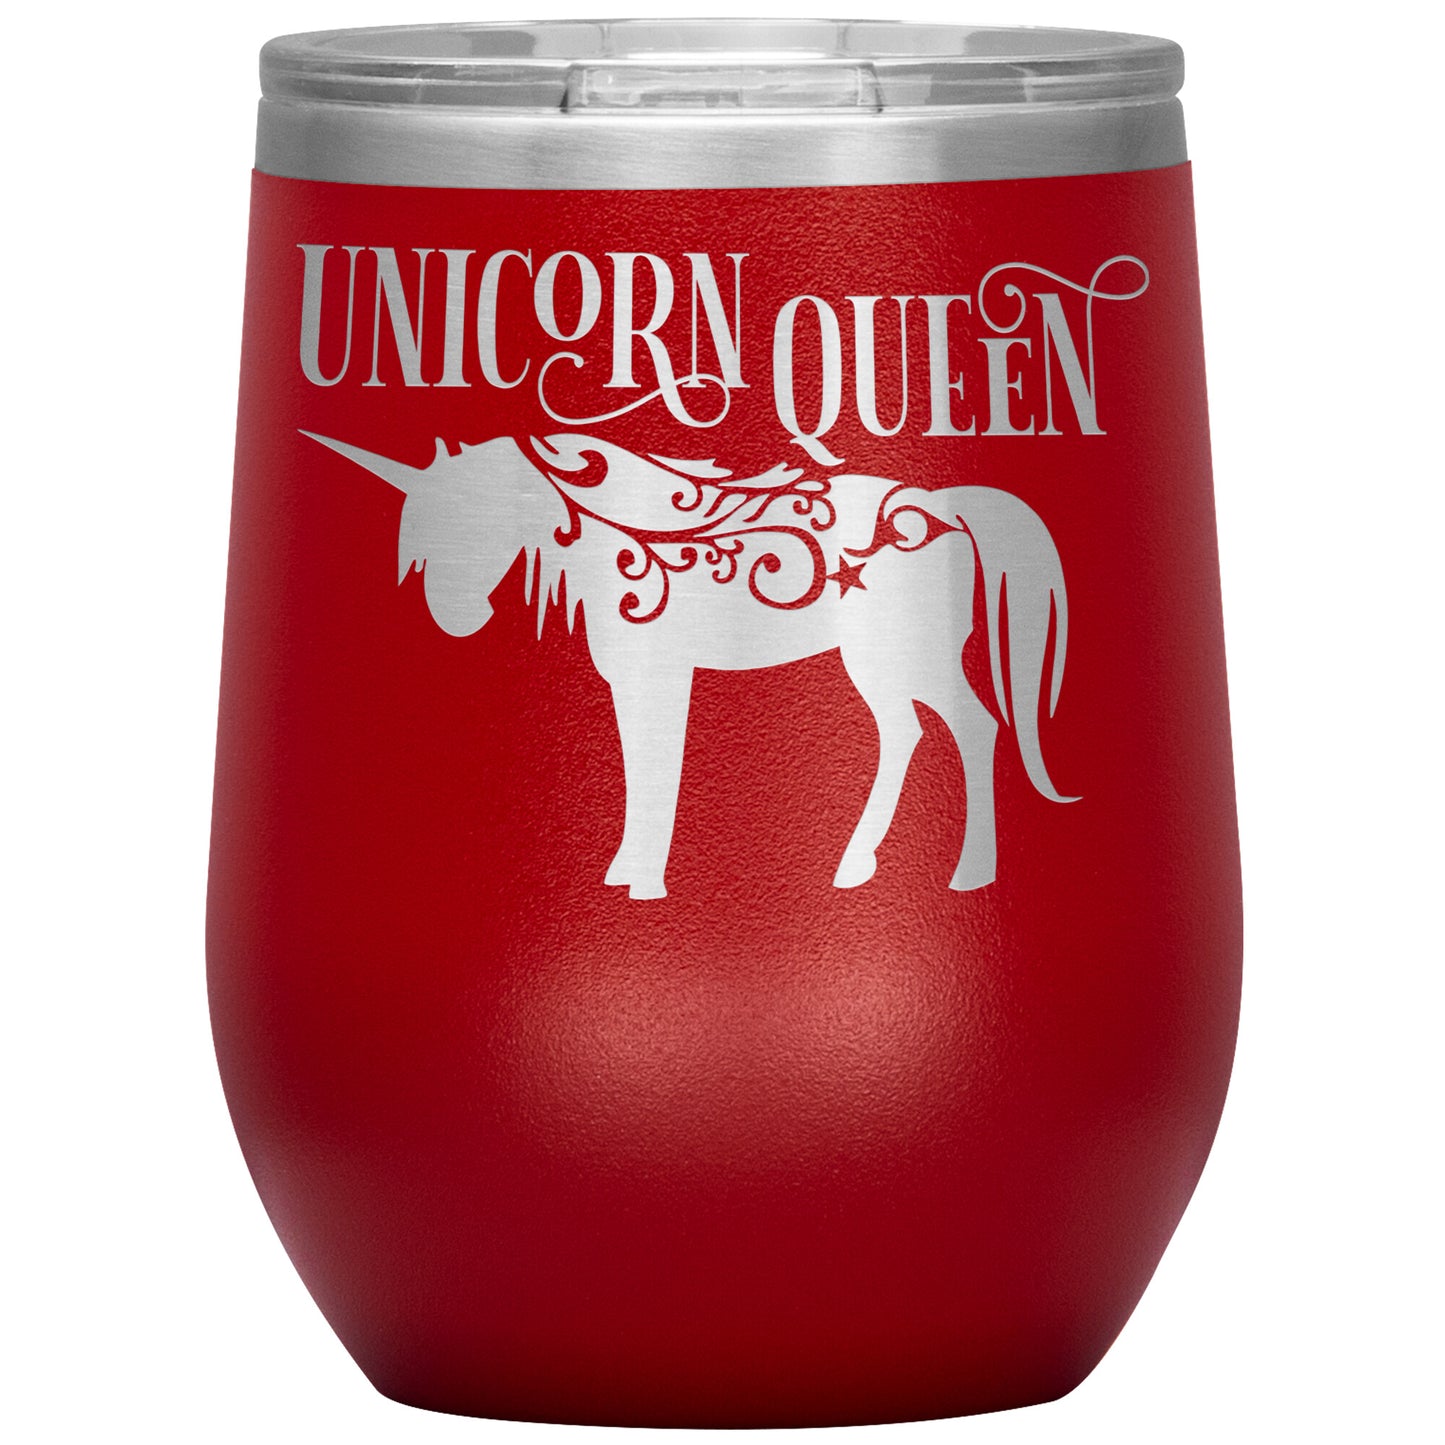 Unicorn Queen 12oz Wine Insulated Tumbler